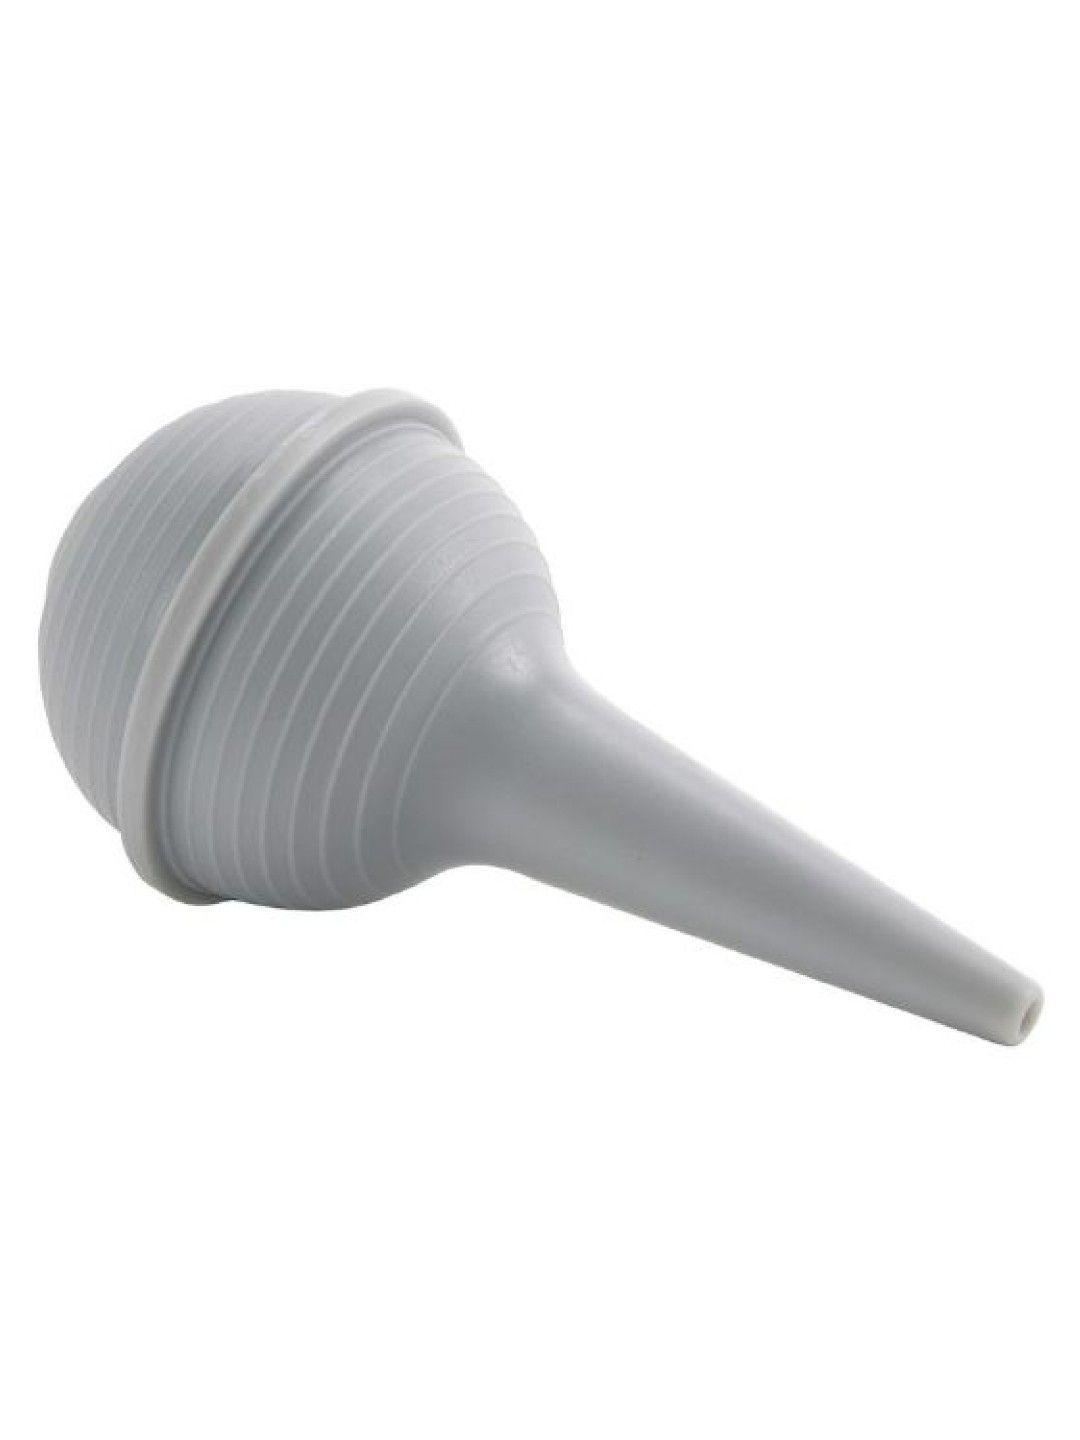 Safety 1st Nasal Aspirator (Grey- Image 1)